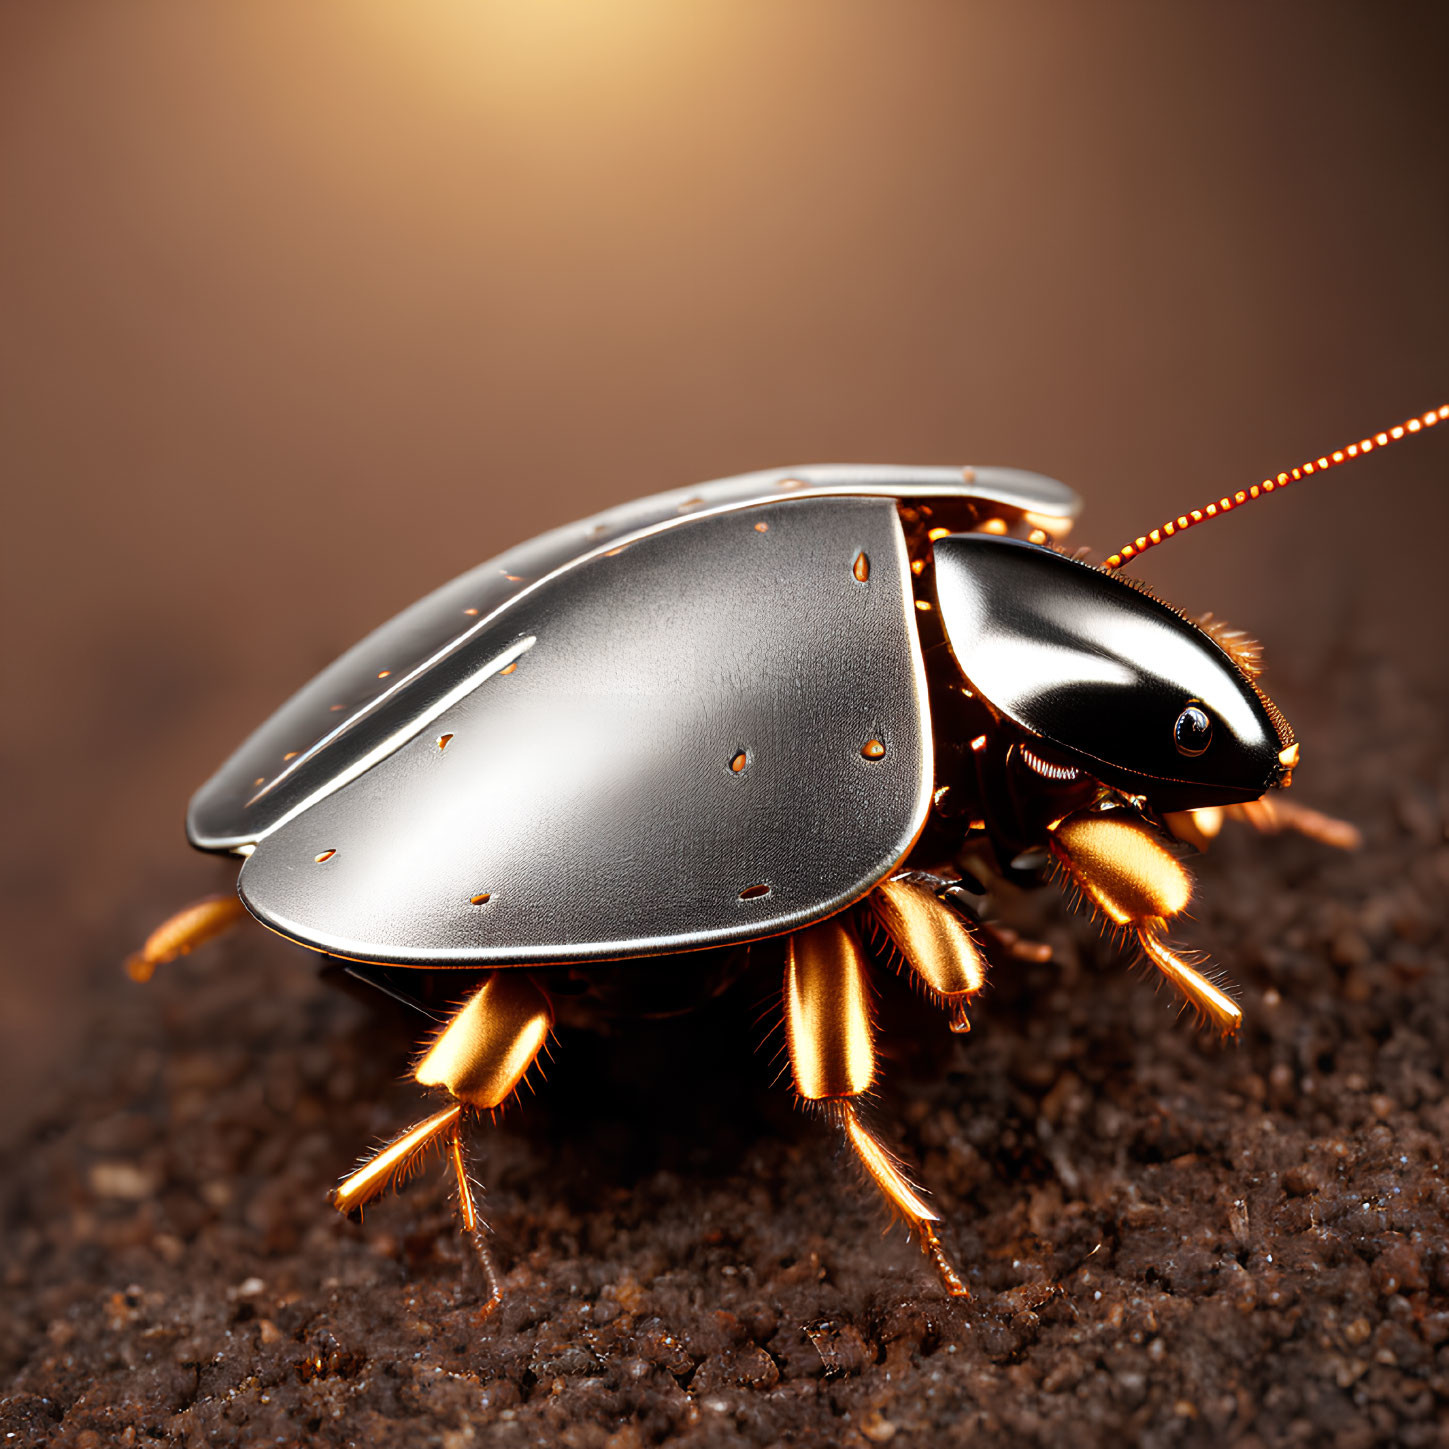 Metallic beetle with segmented body on earthy background under warm light